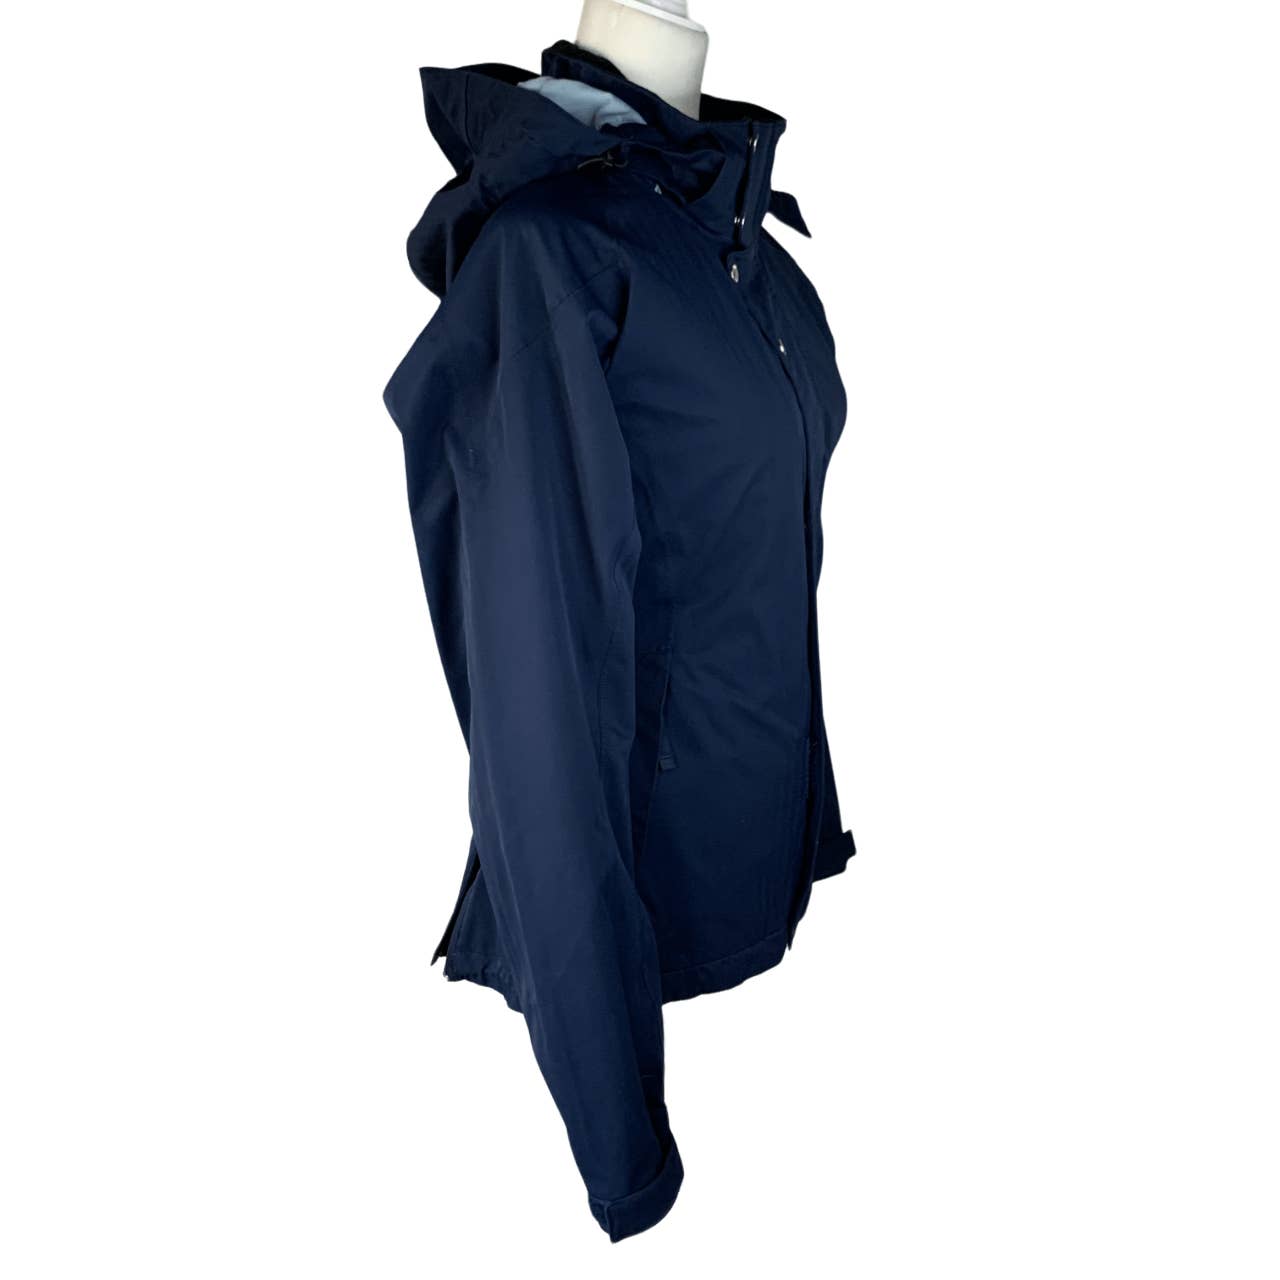 Ariat 'Teton' Riding Jacket in Blue - Woman's Medium